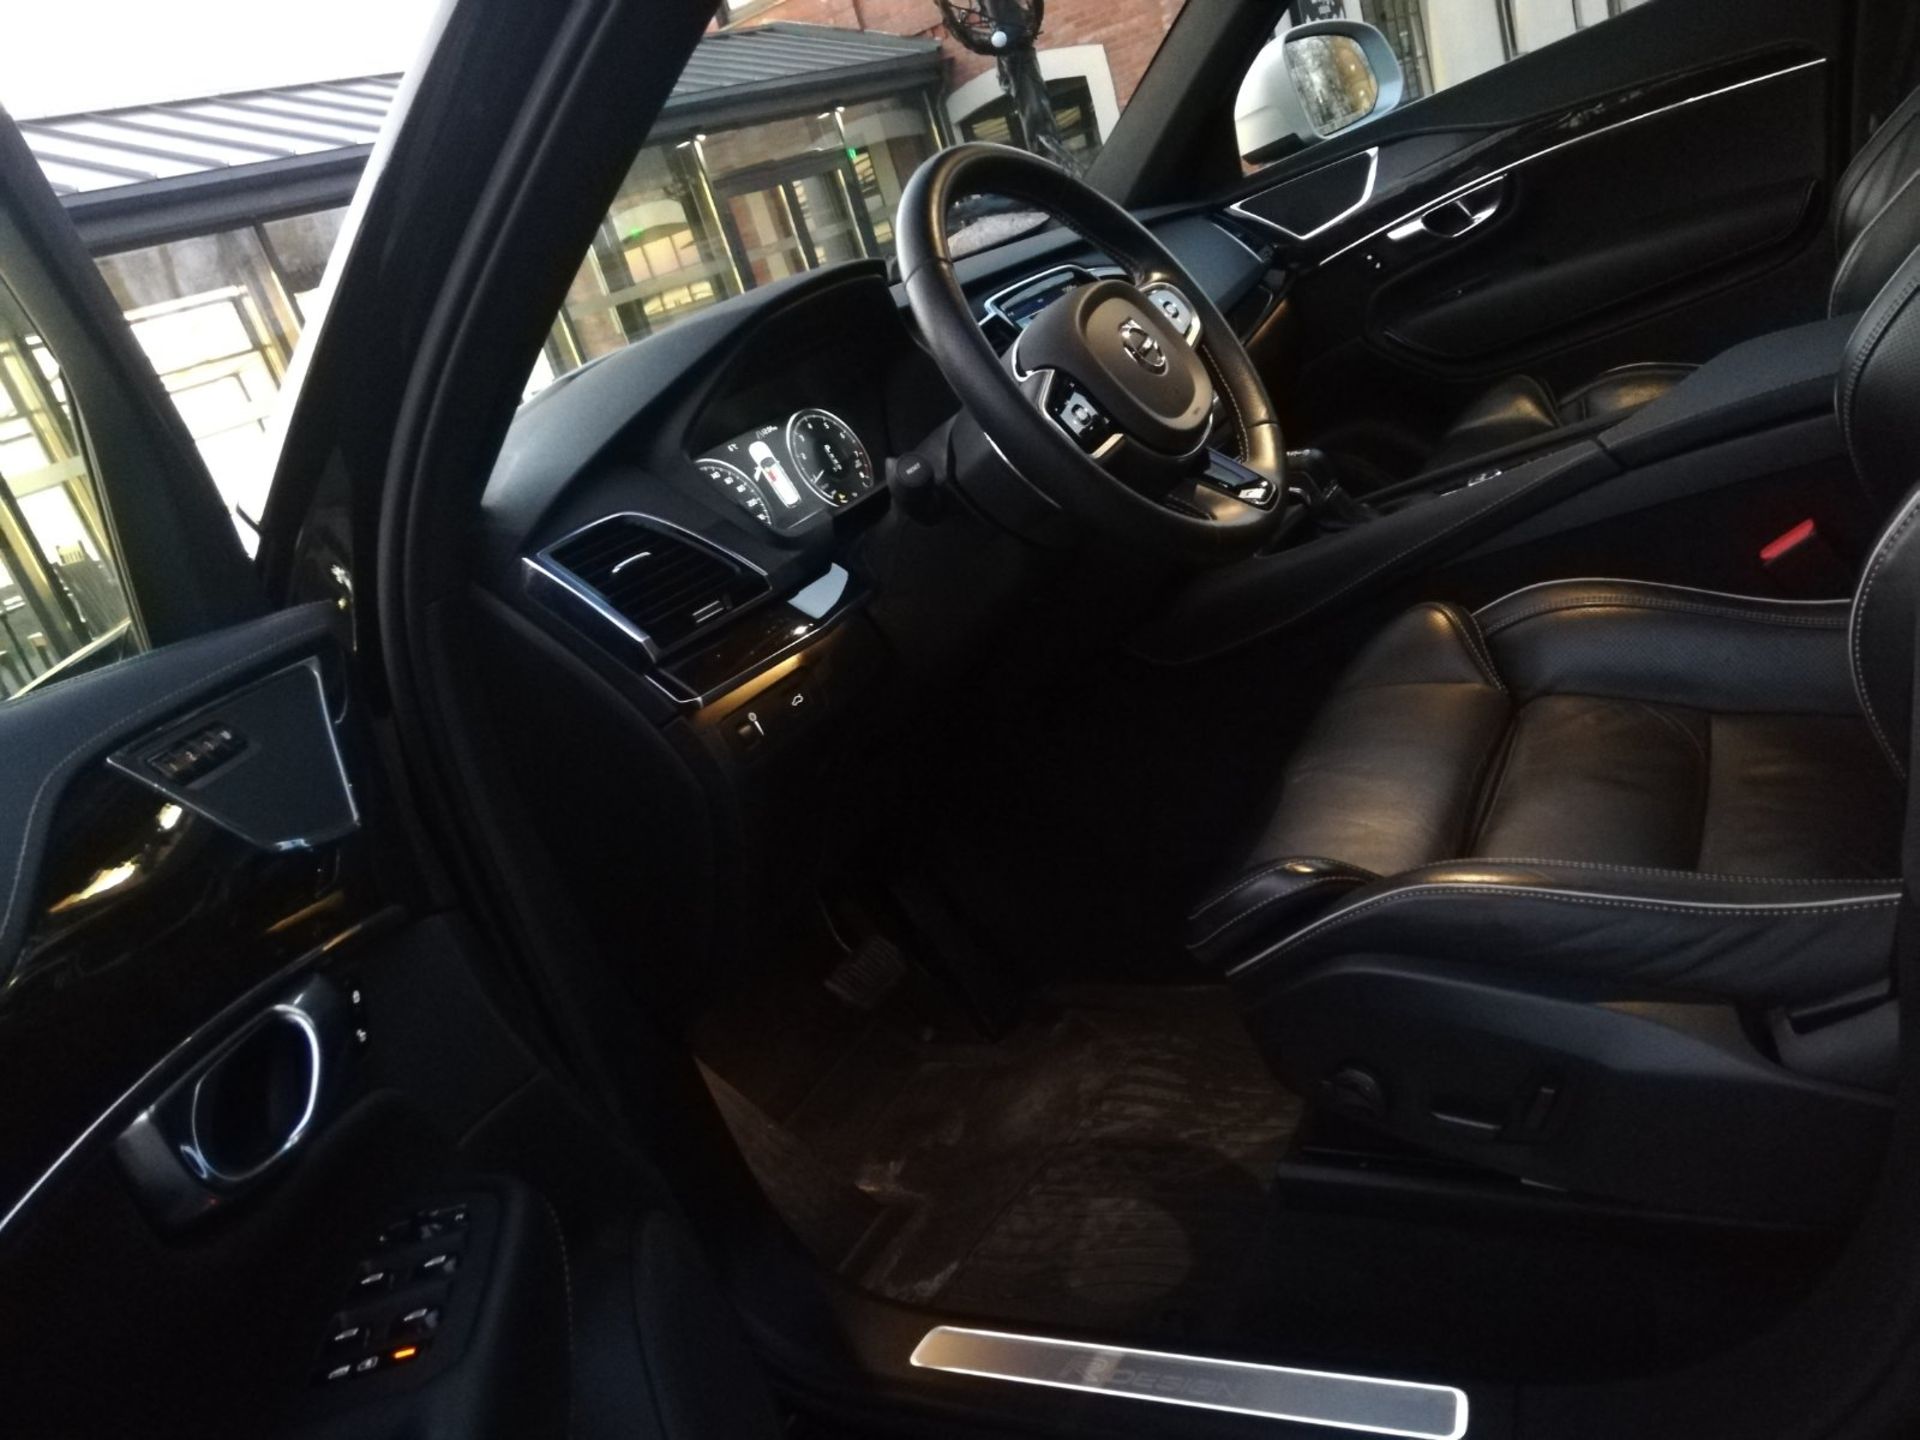 2017 VOLVO XC90 T6 AWD LHD 7 SEAT R-DESIGN 2.0L PETROL AUTOMATIC, 45,000 KM, DRIVES LIKE NEW 7 - Image 13 of 20